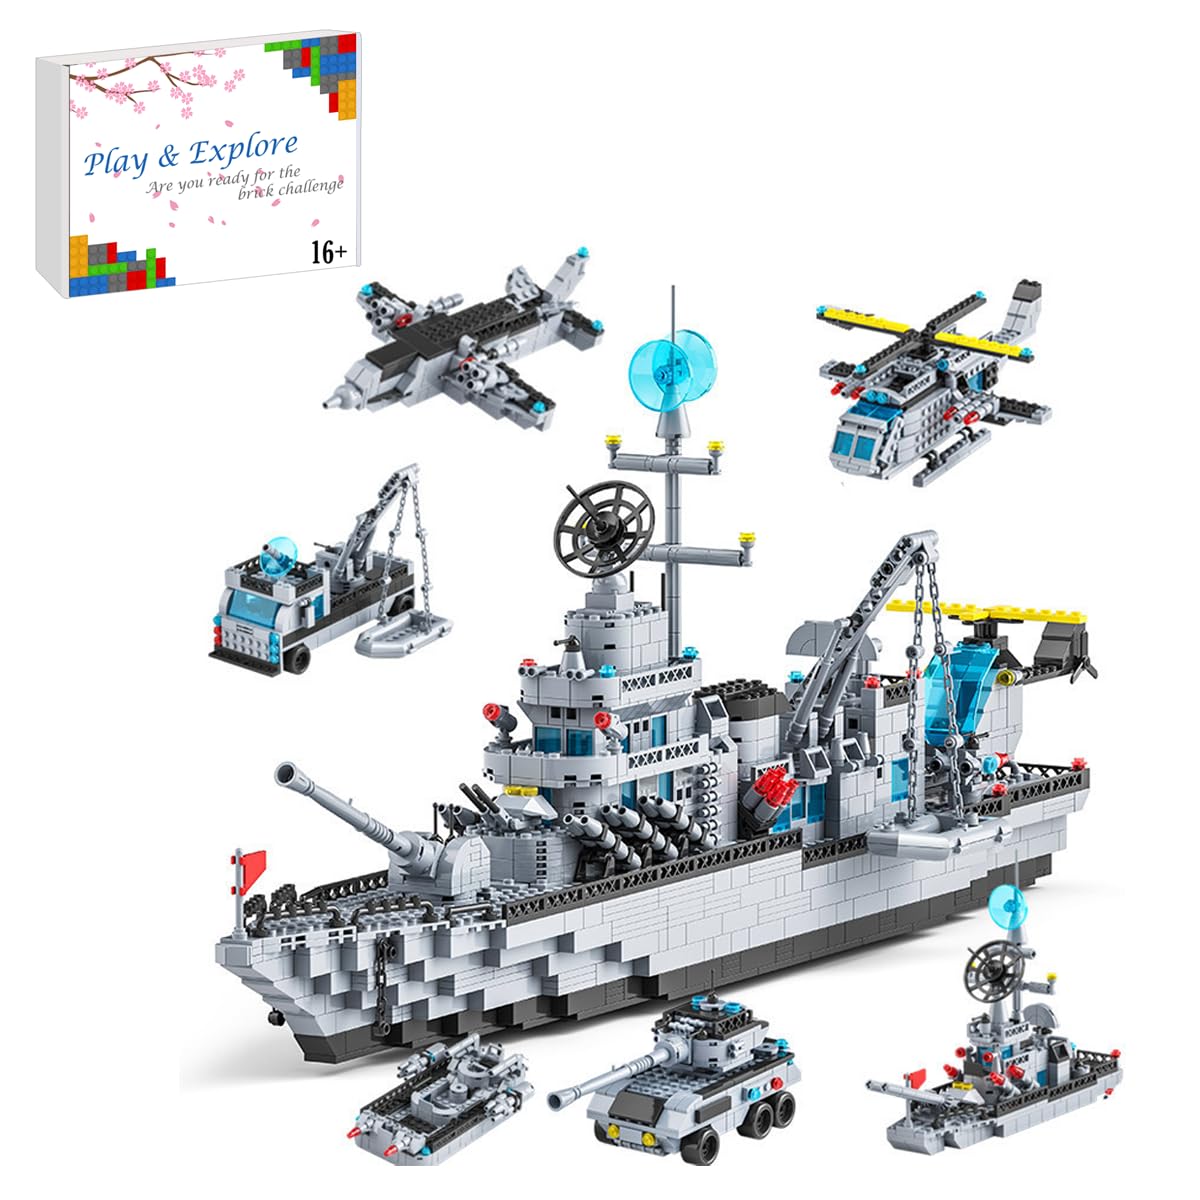 FULHOLPE Missile Destroyer Building Blocks Set 6 in 1 MOC Military Warship Model Bricks Battleship Construction Toy Compatib